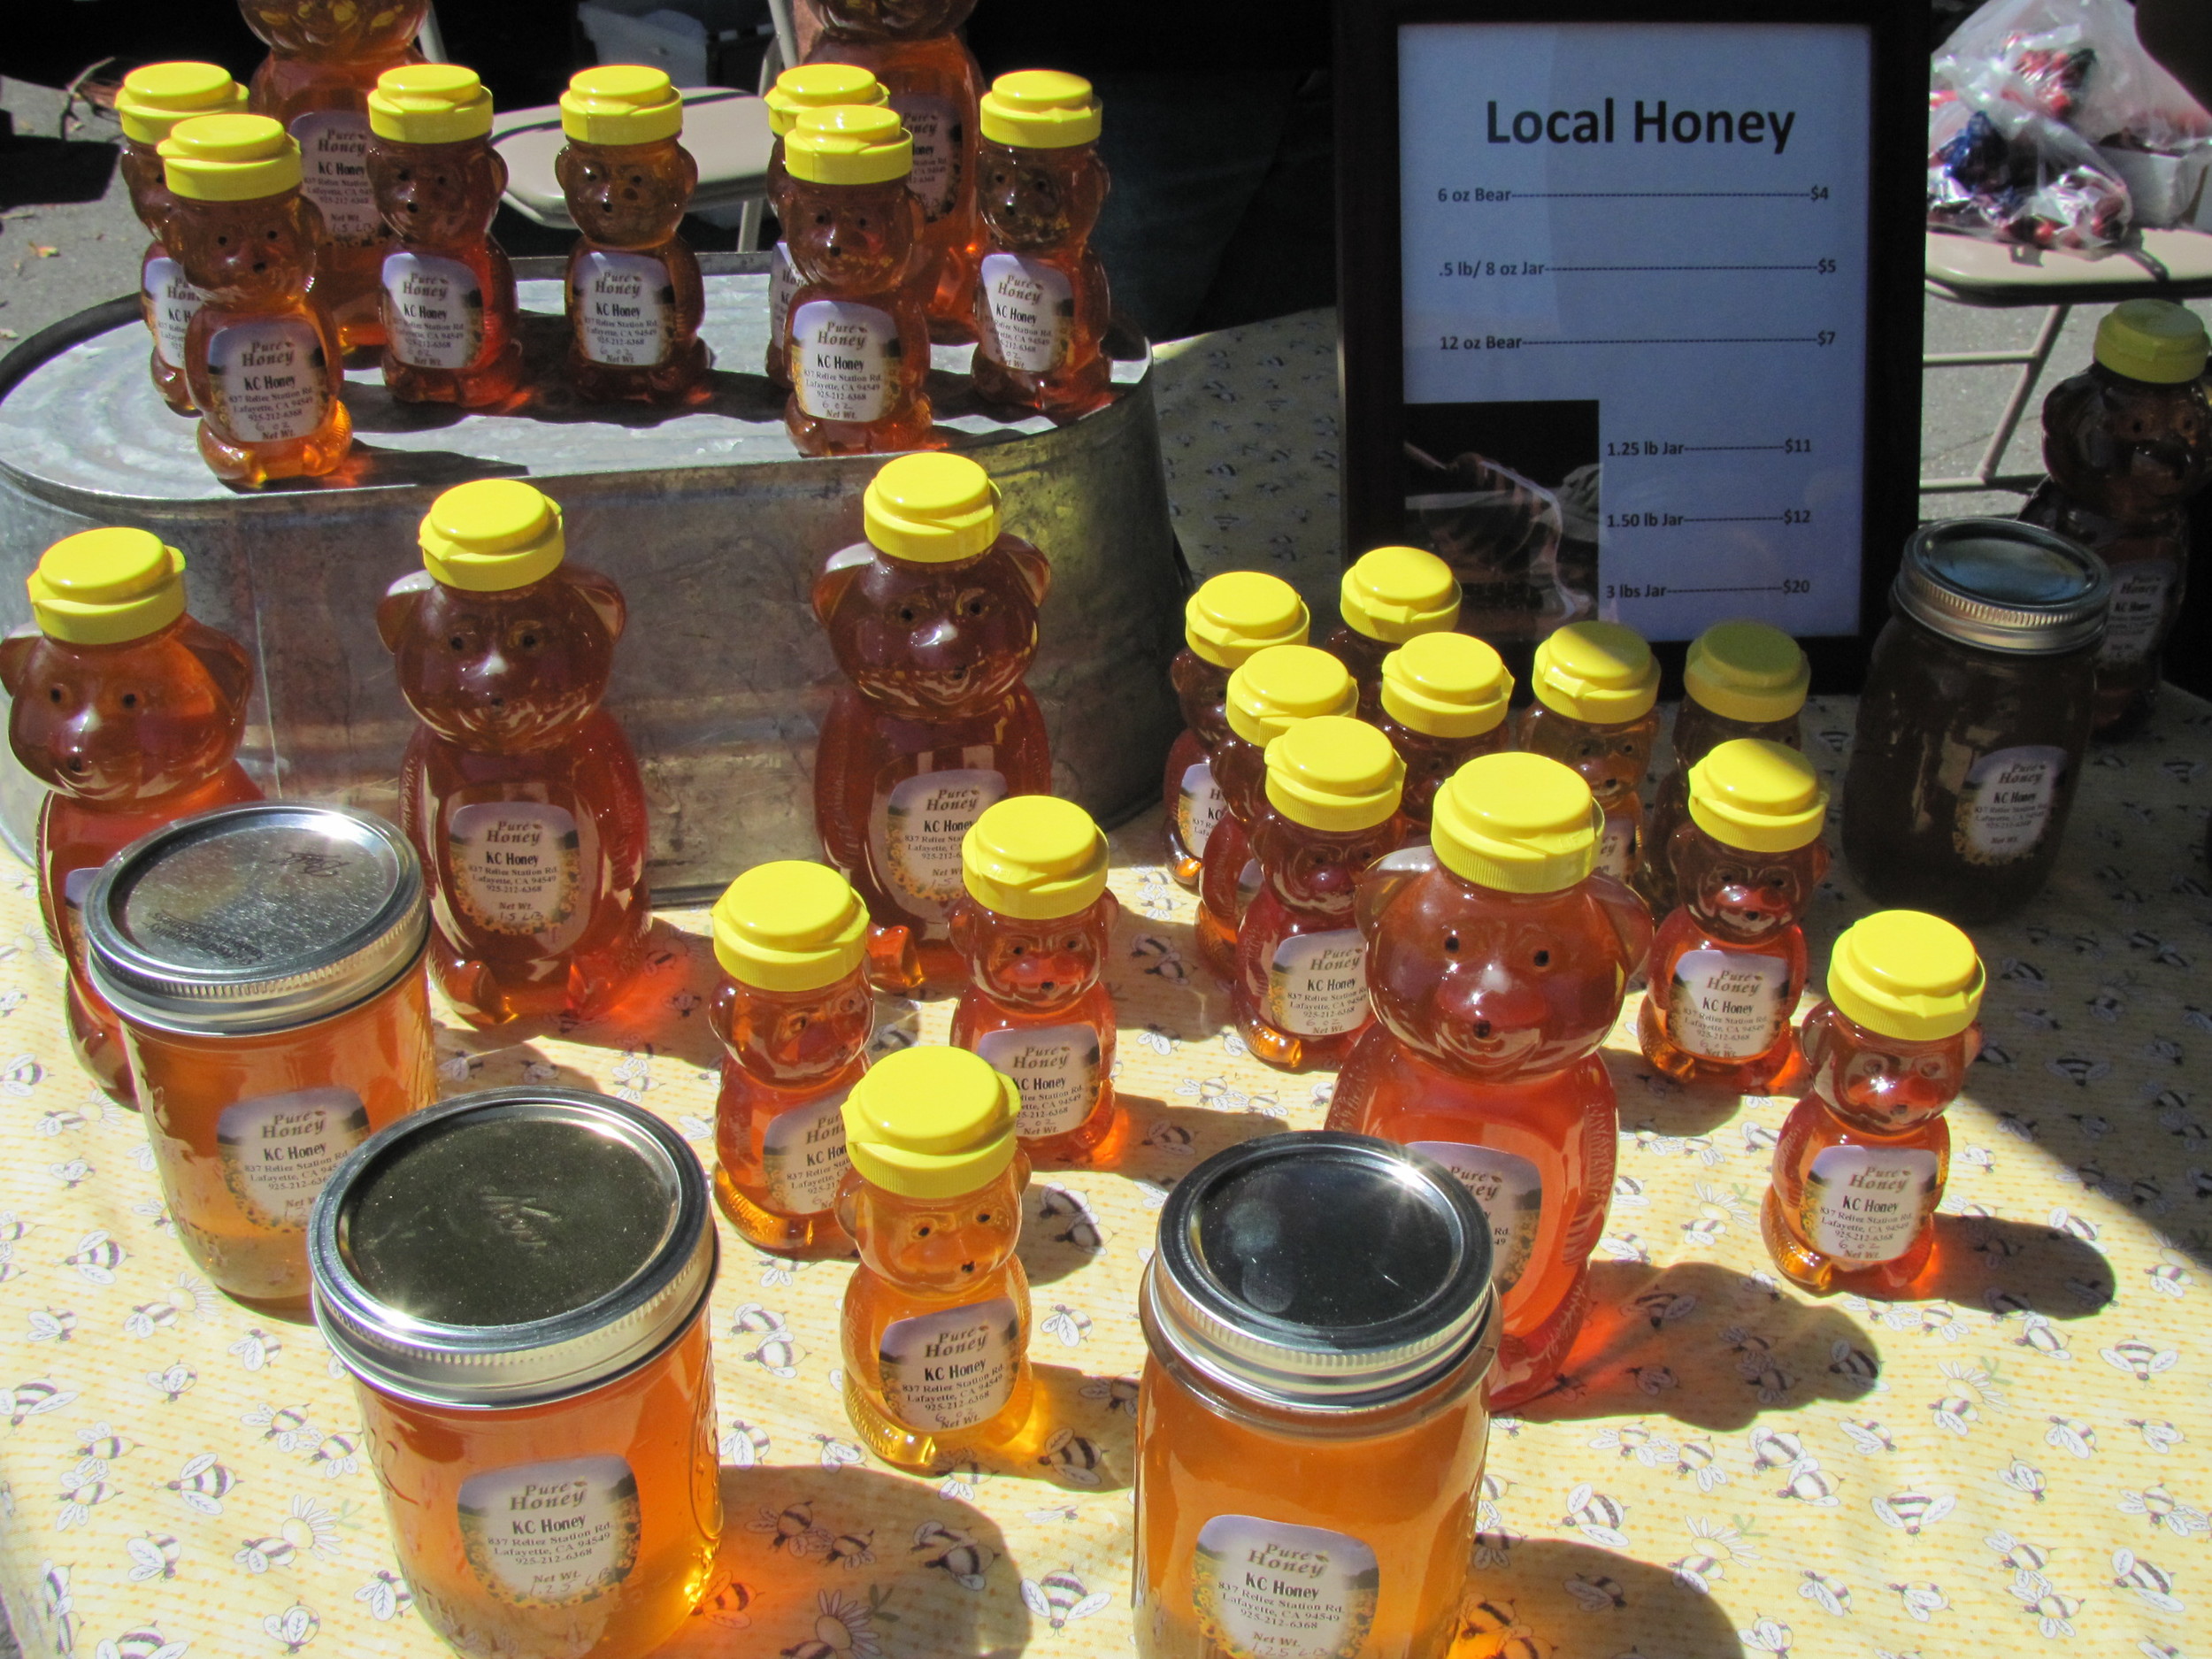 Rossmoor Farmers' Market local honey